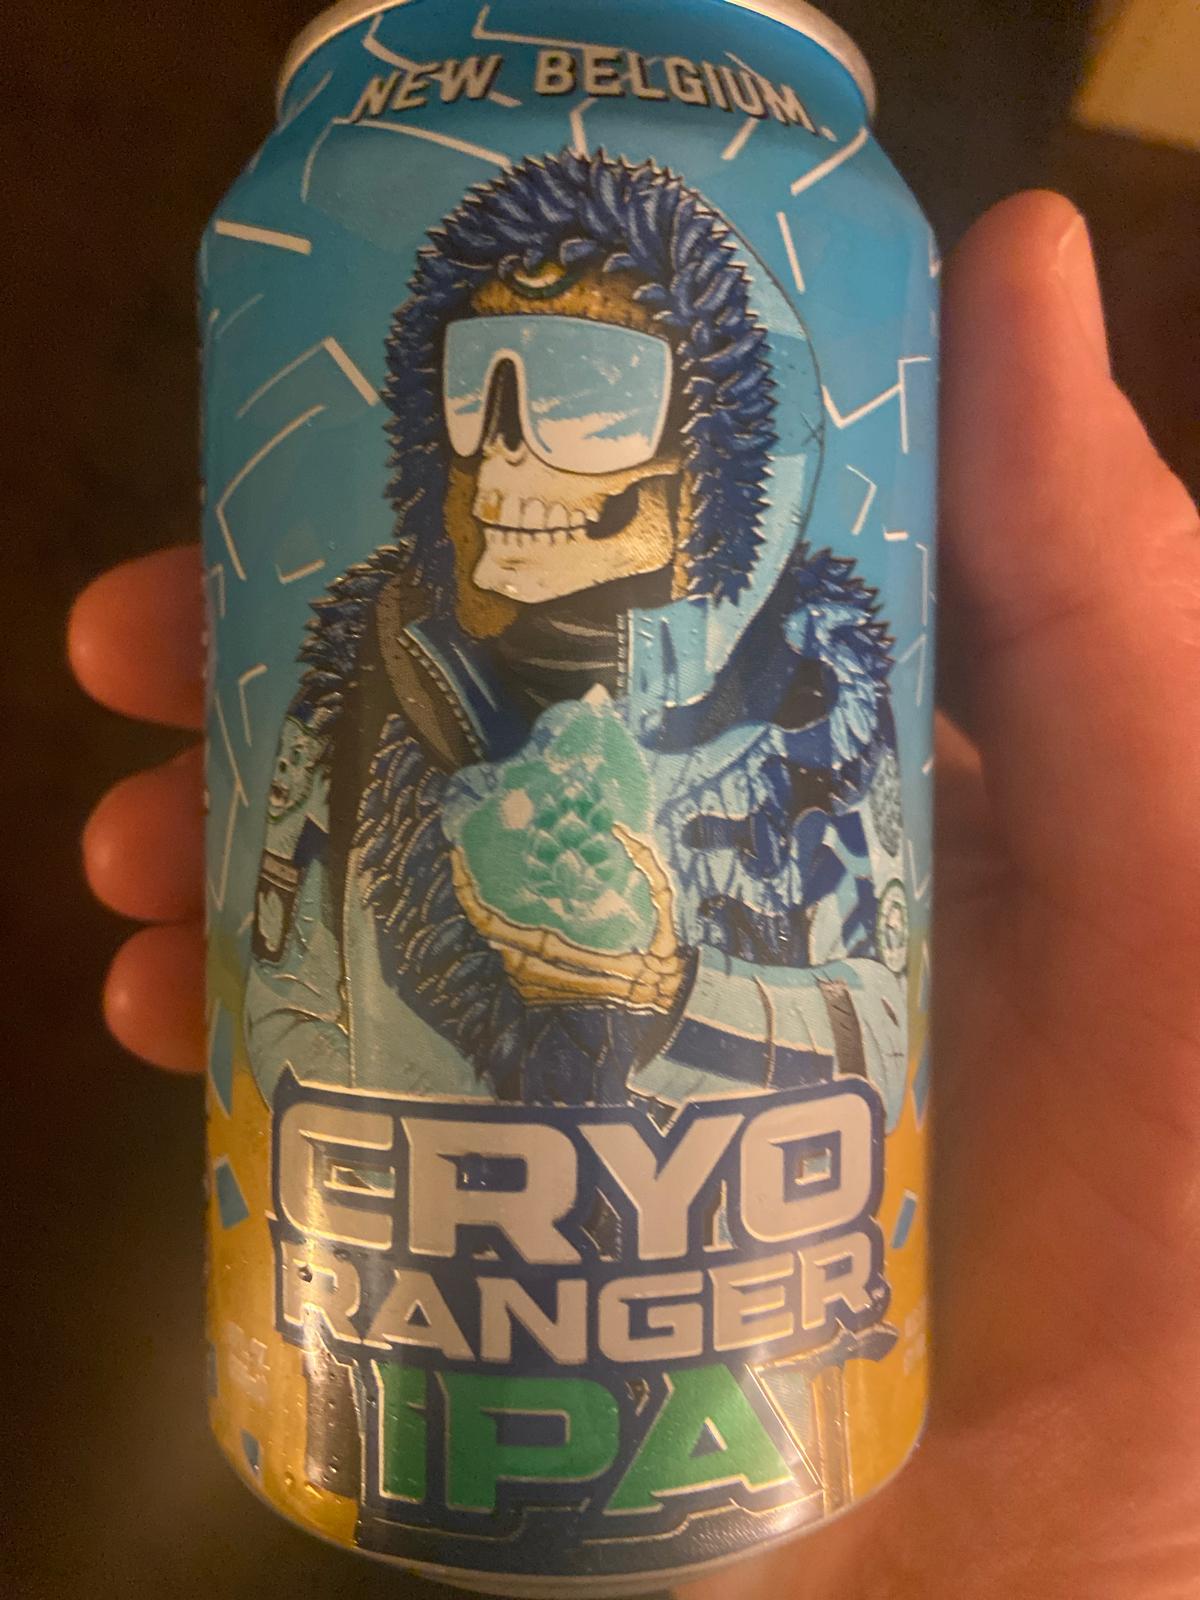 Voodoo Ranger Cryo Ranger IPA